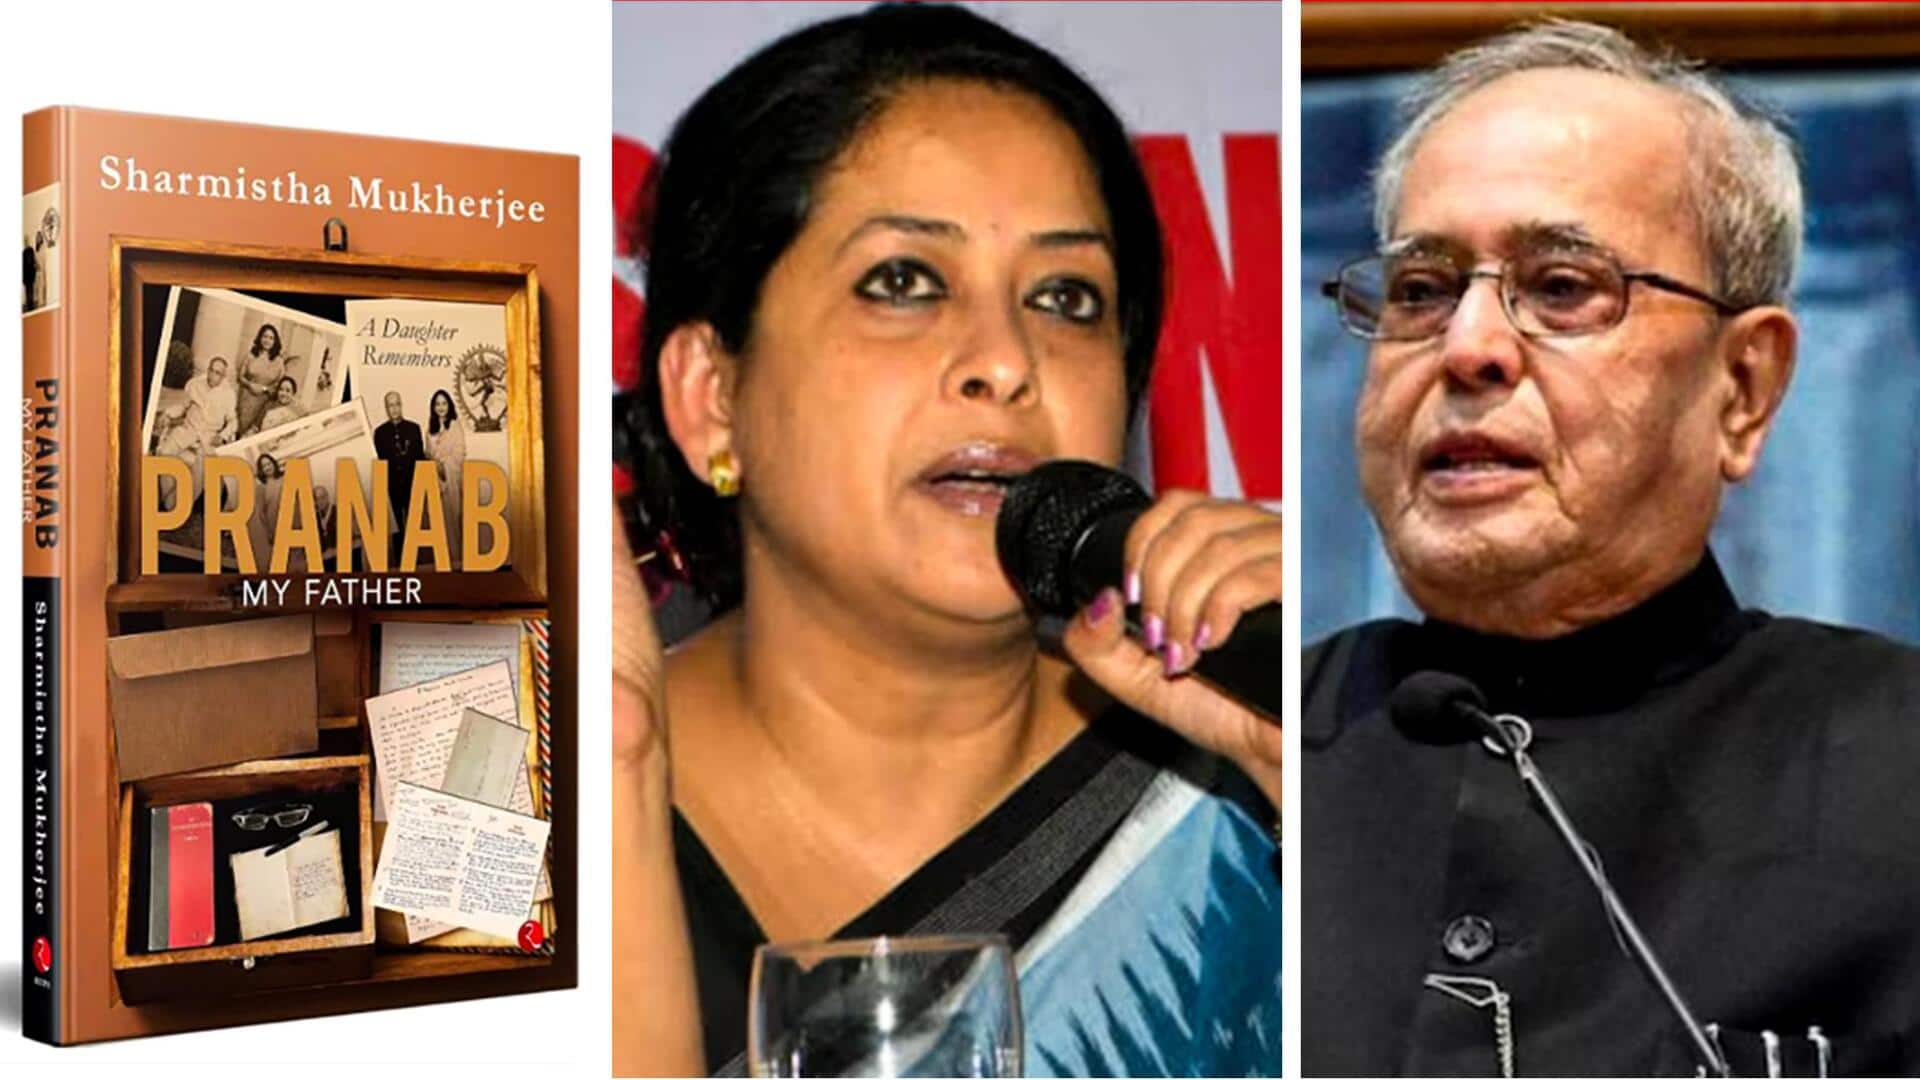 Disillusioned Pranab Mukherjee denounced Gandhi-Nehru hegemony in Congress: Daughter's book